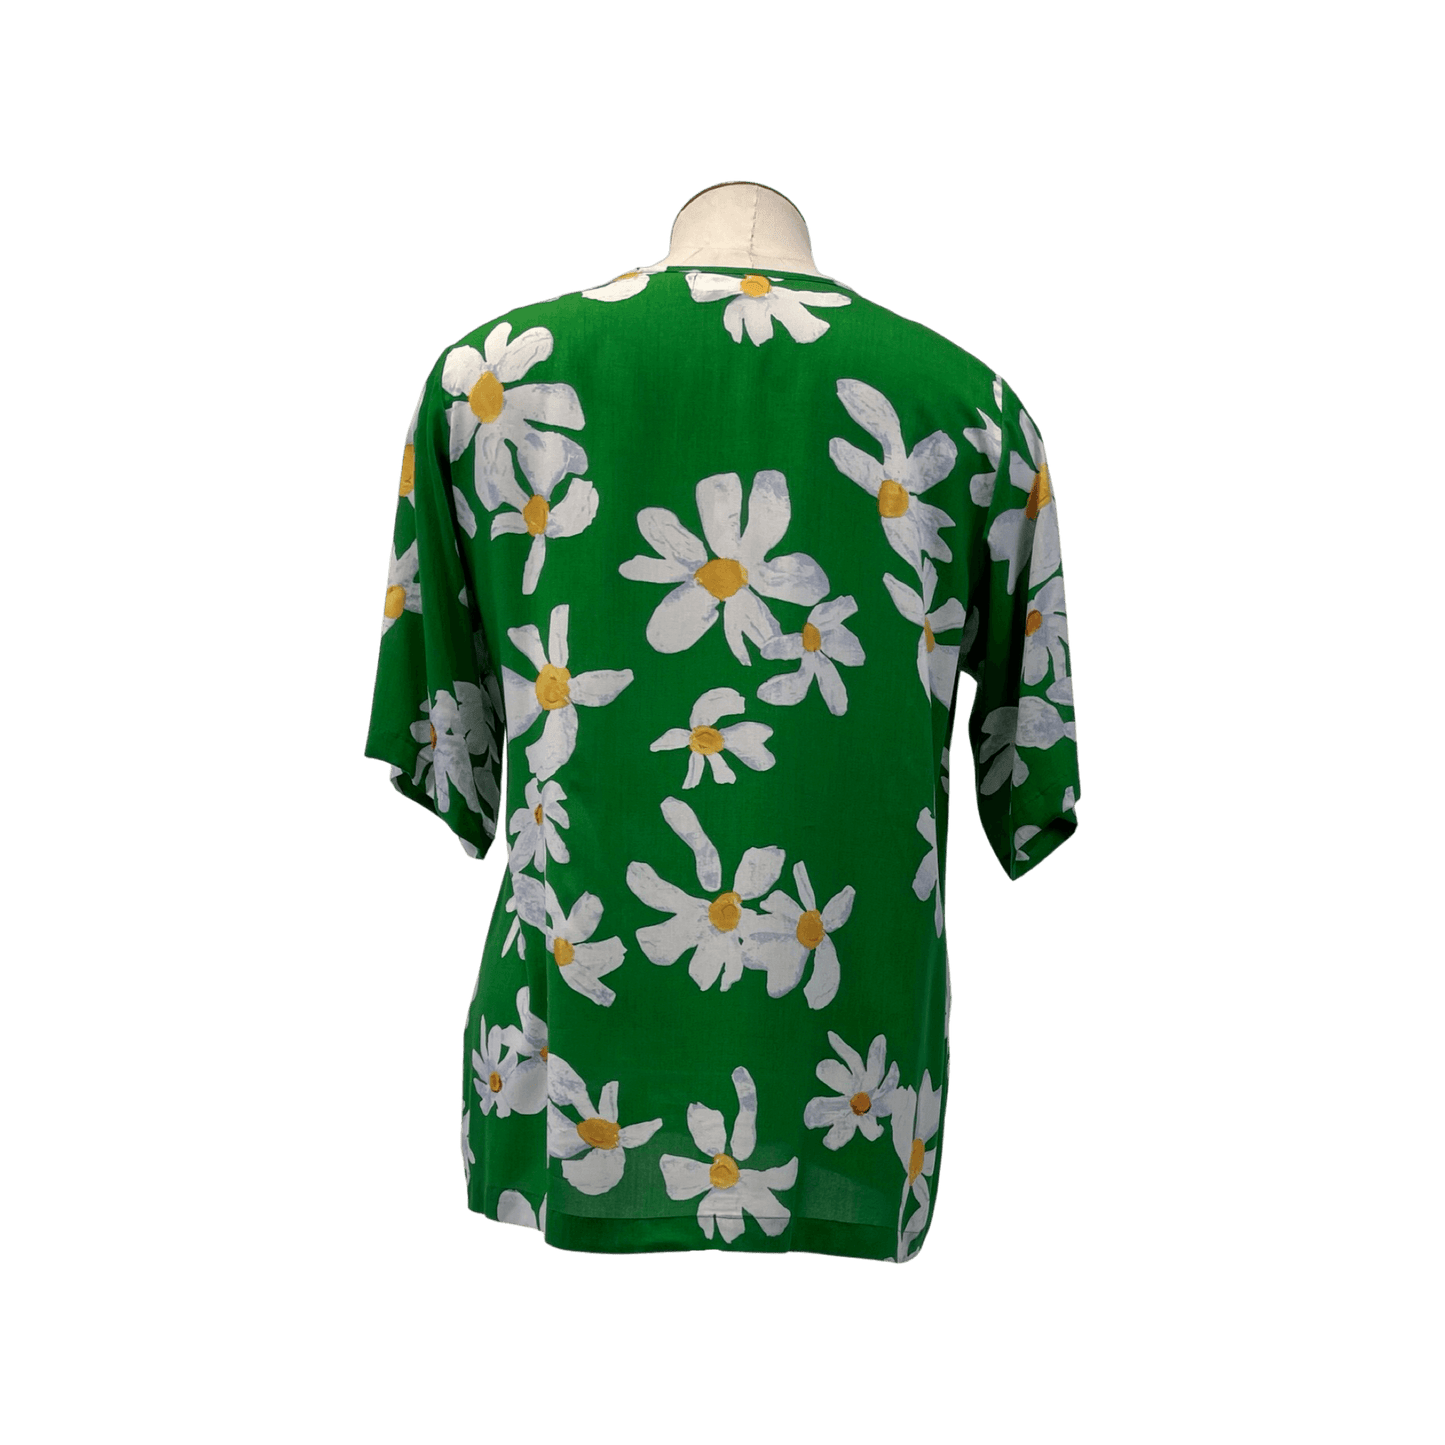 Bloom Clothing NZ,FRESH DAISY TOP -Grass Green,$189.00,